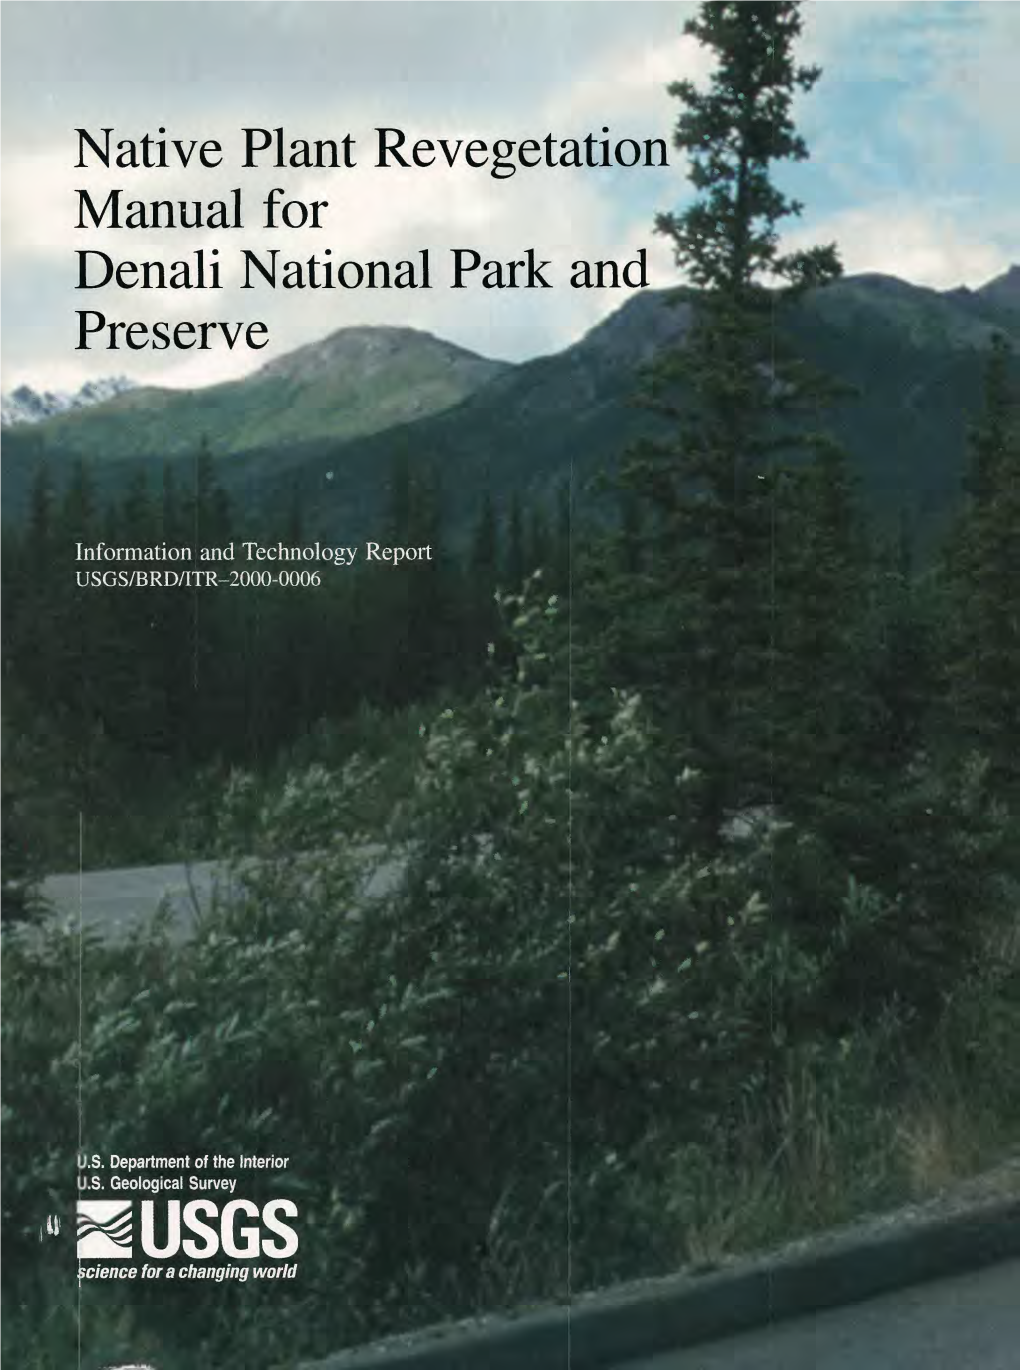 Native Plant Revegetation Manual for Denali National Park and Preserve